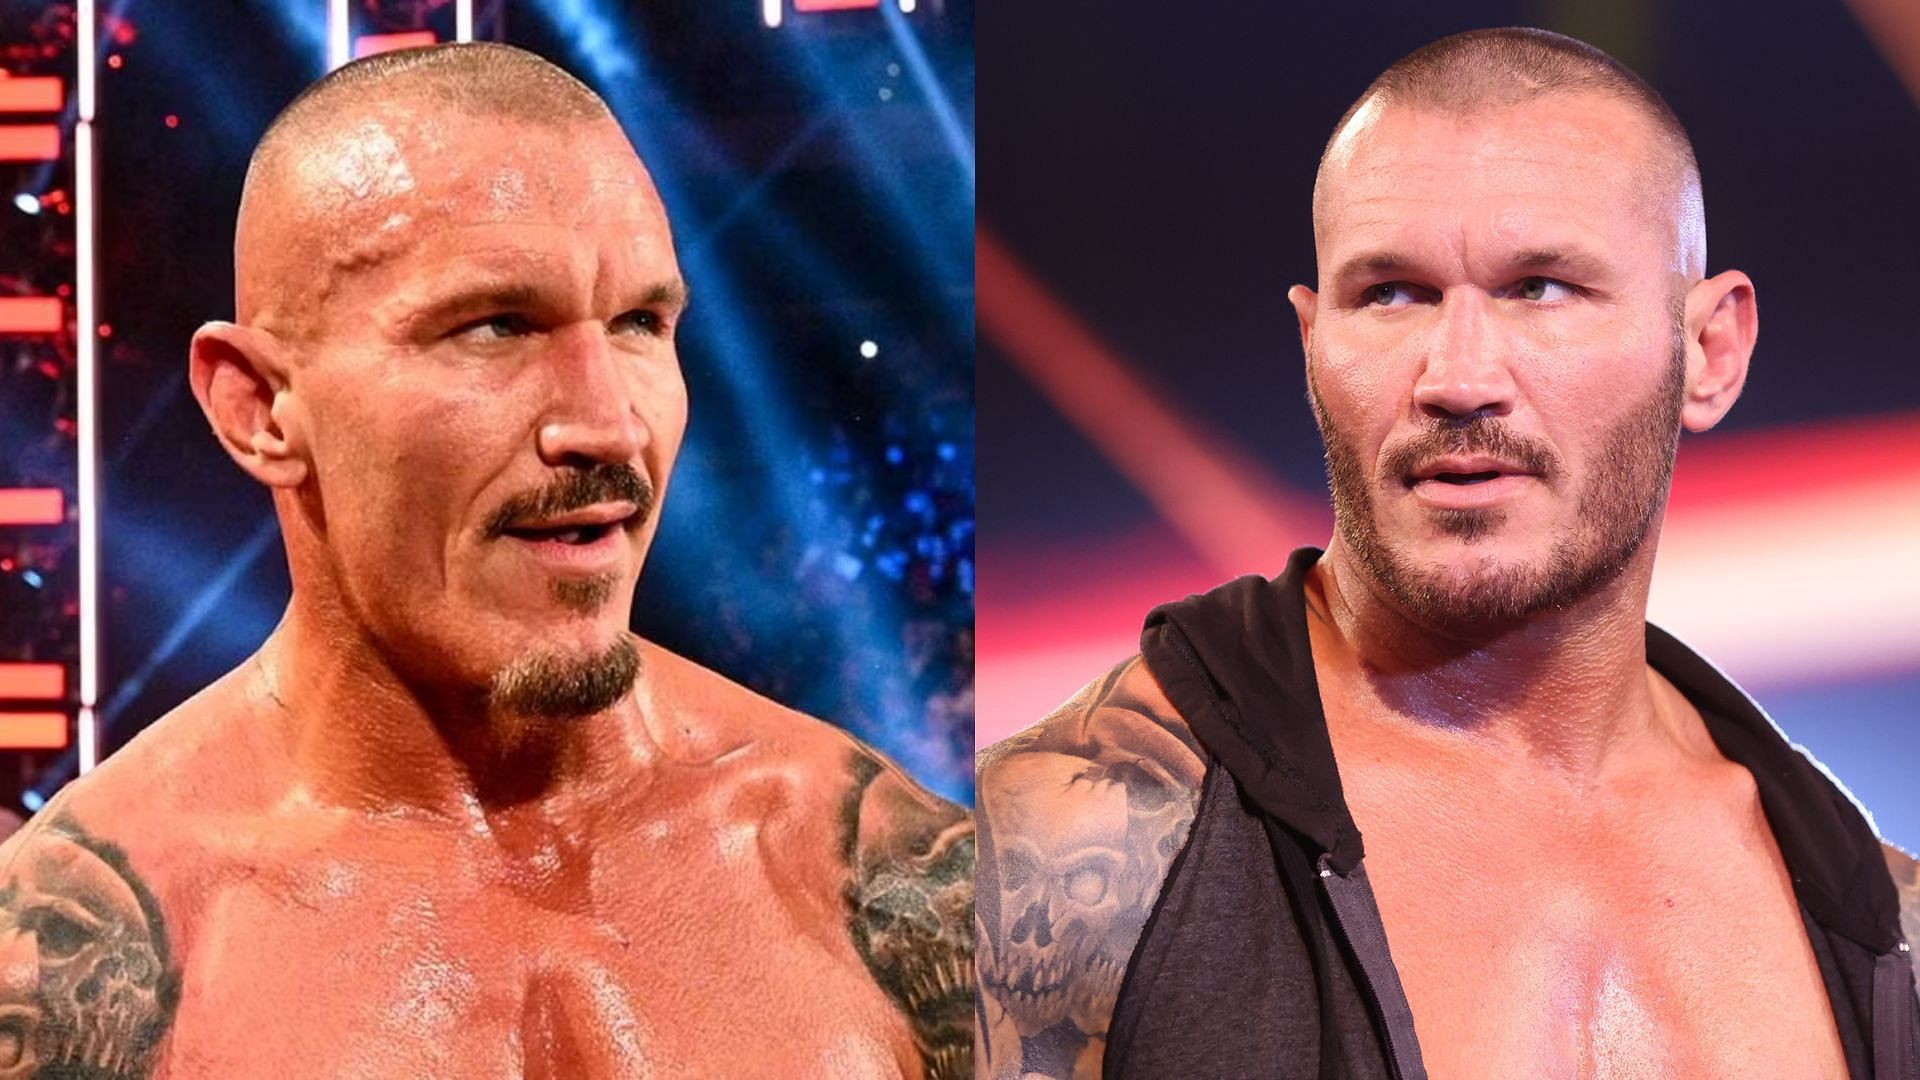 Randy Orton is sorely missed in WWE.